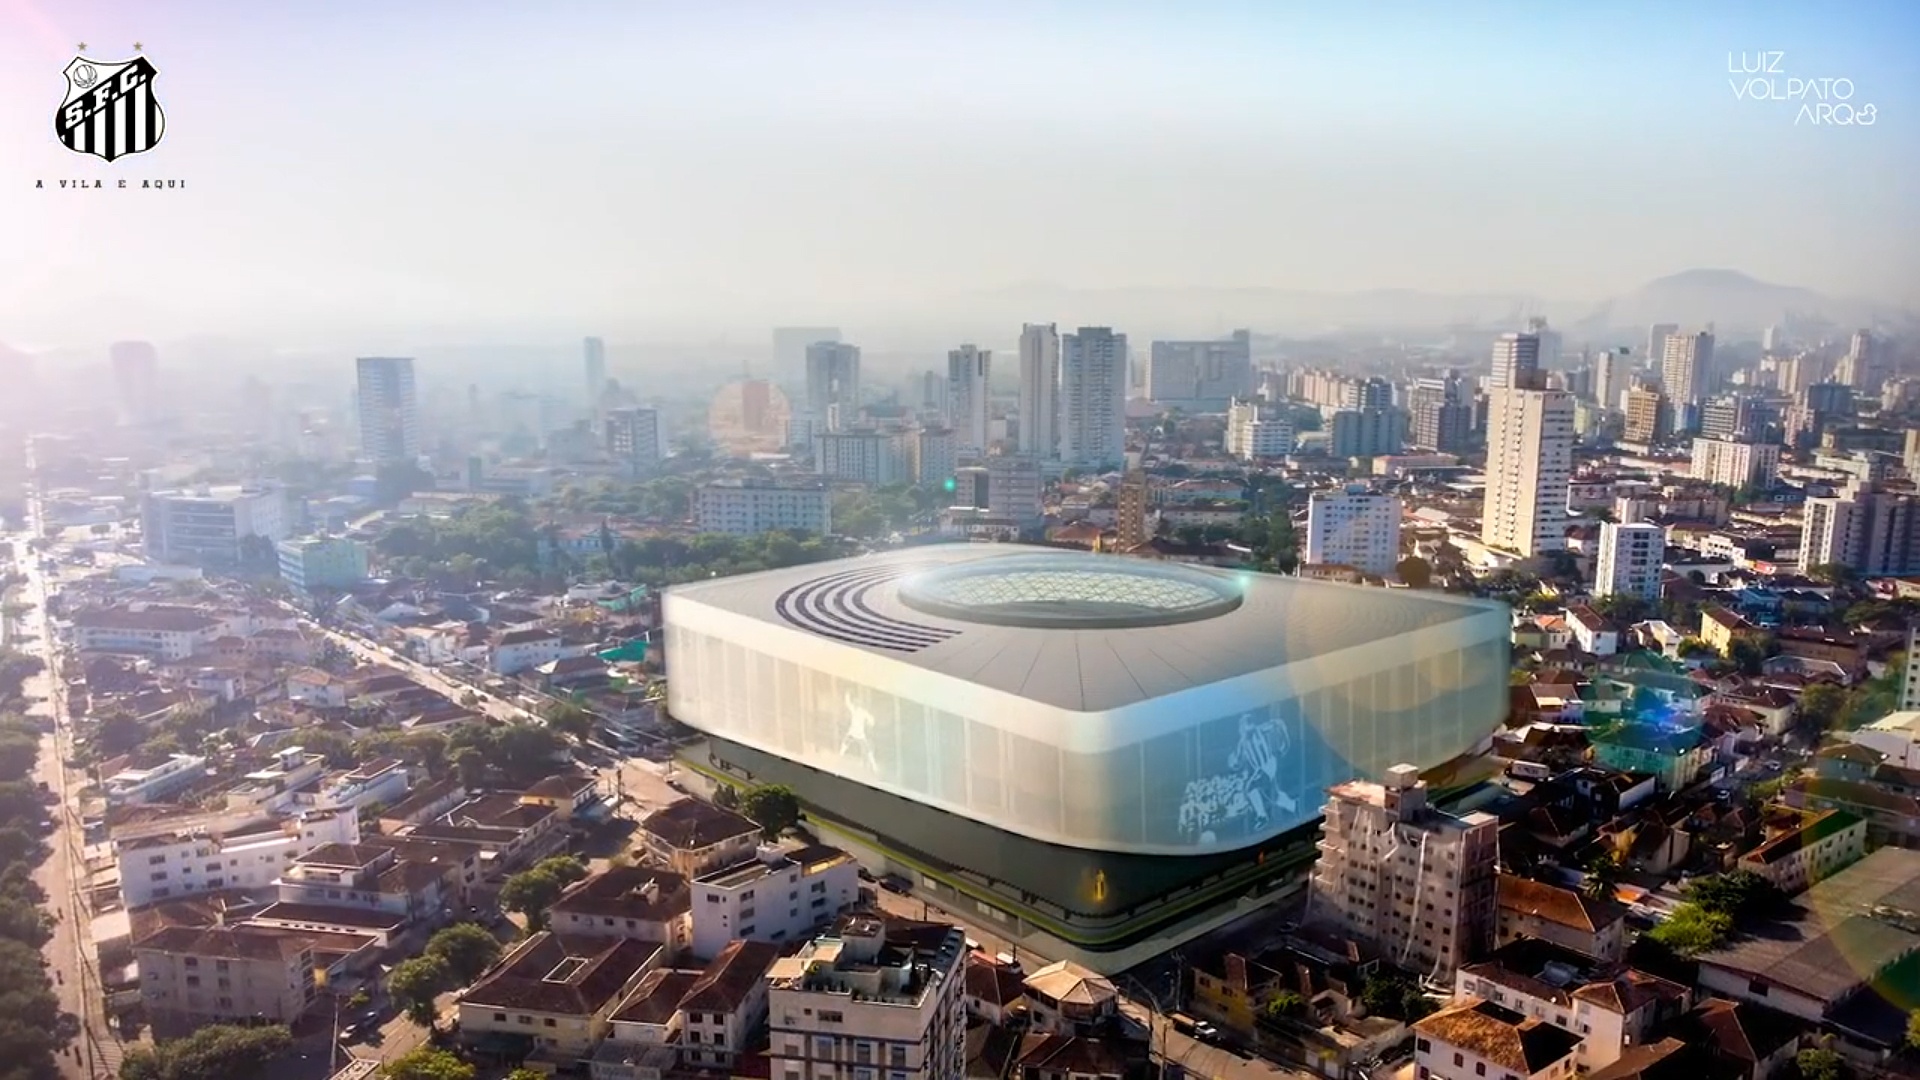 Estádio Urbano Caldeira - Wikipedia